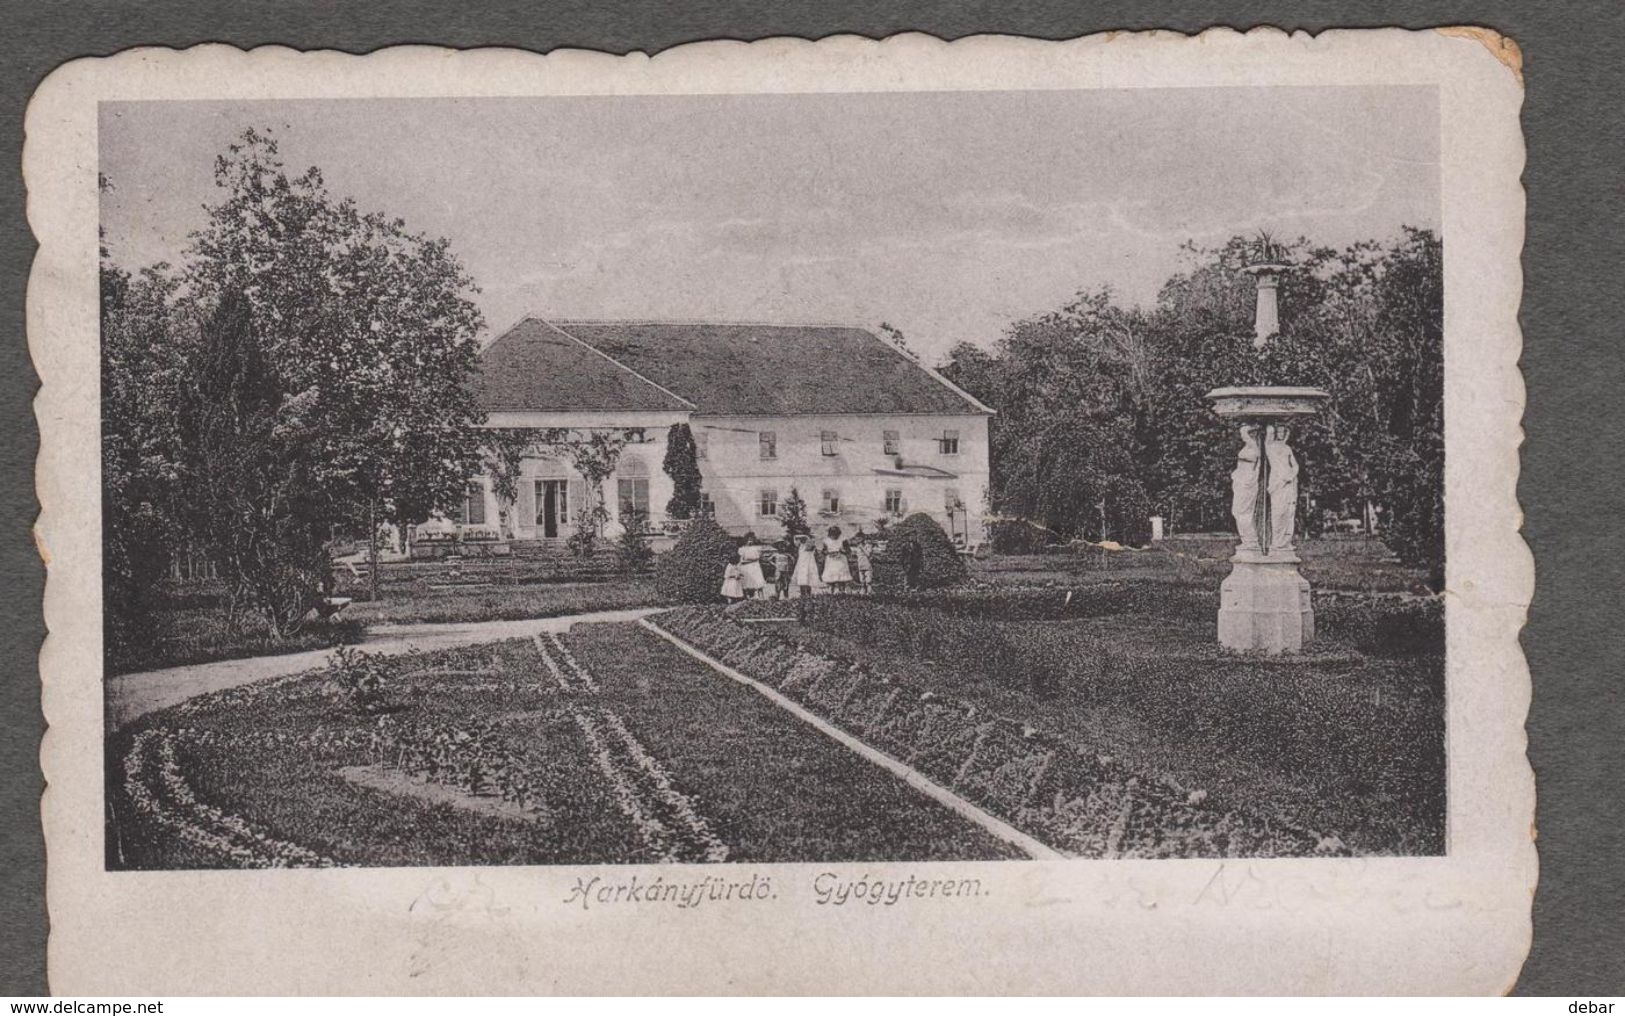 HUNGARY - HARKANYFURDO GYOGYTEREM - Travelled 1919 - Ungarn